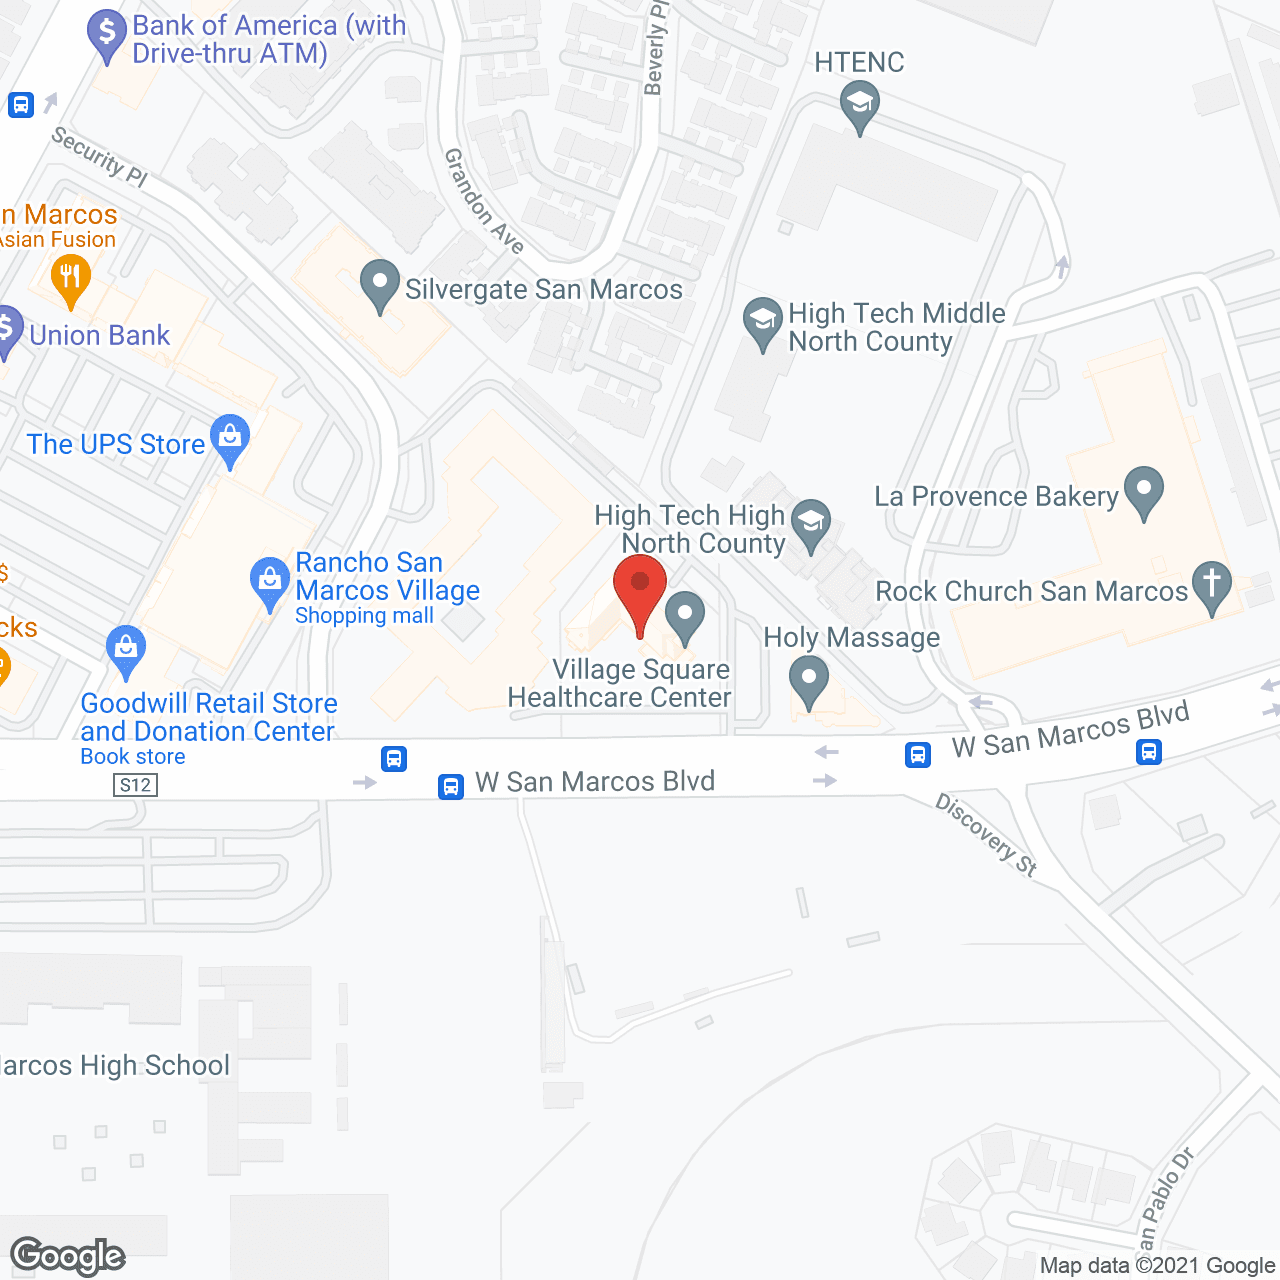 Village Square Nursing and Rehabilitation Center in google map